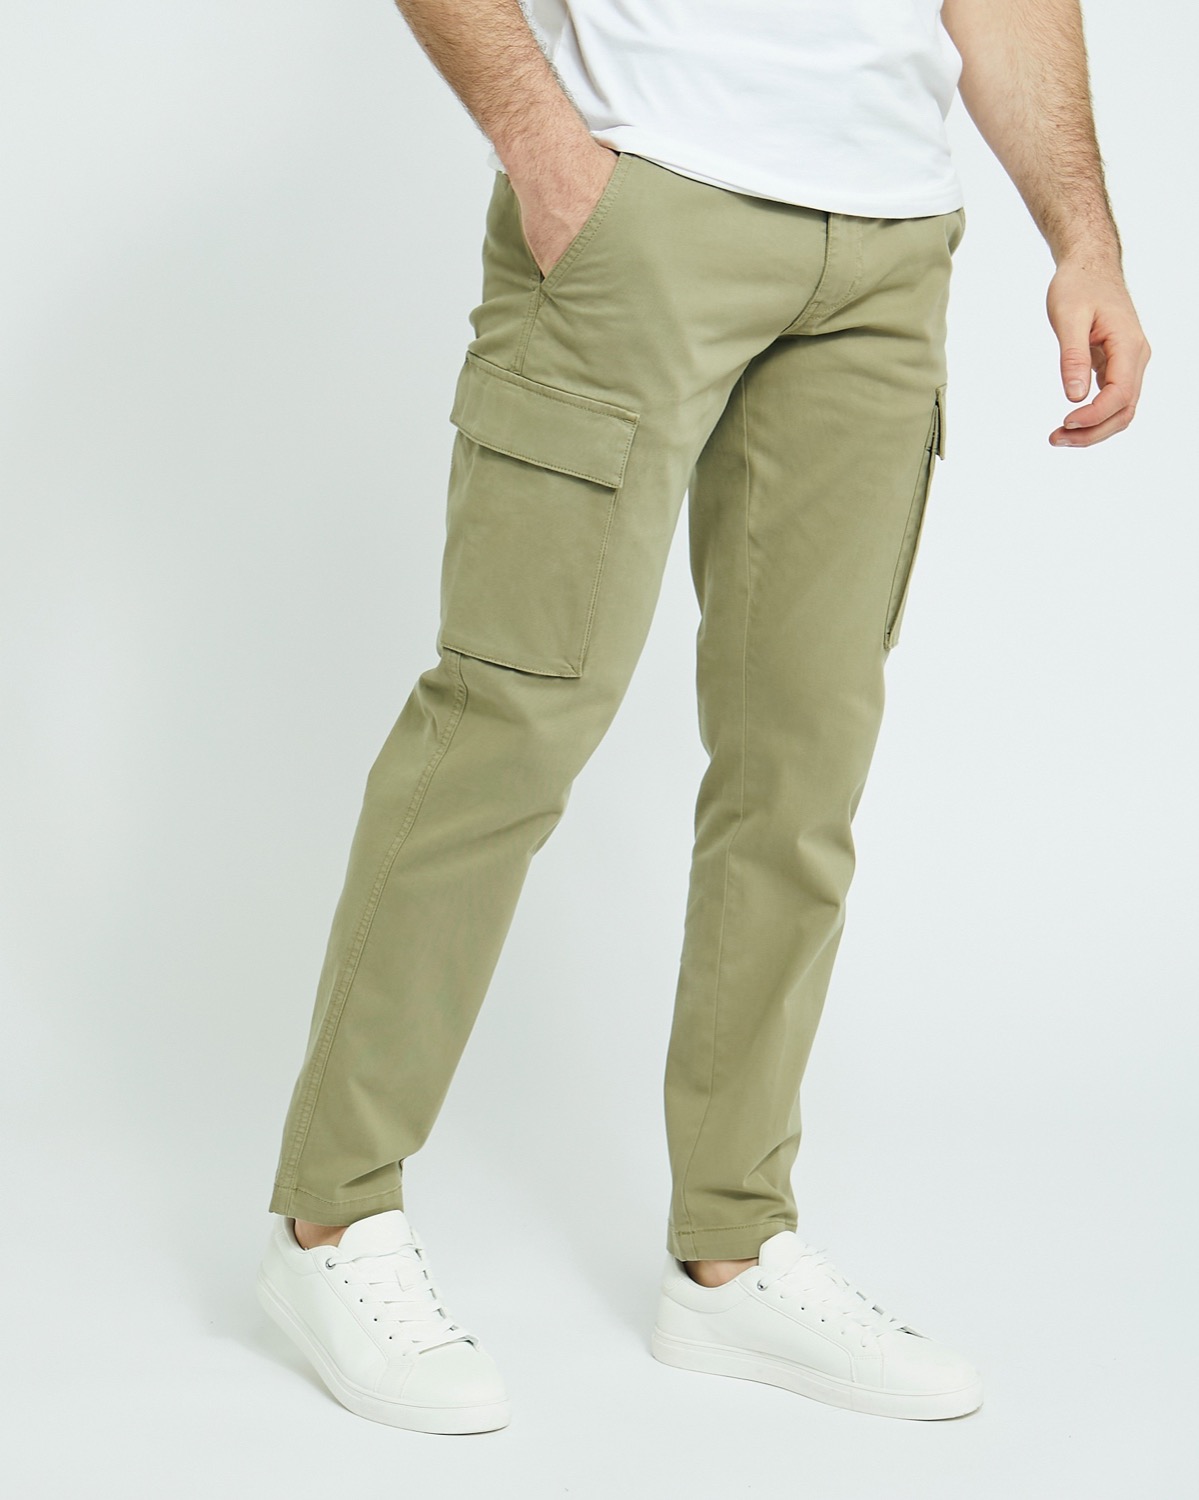 Buy Khaki Trousers  Pants for Men by SUPERDRY Online  Ajiocom